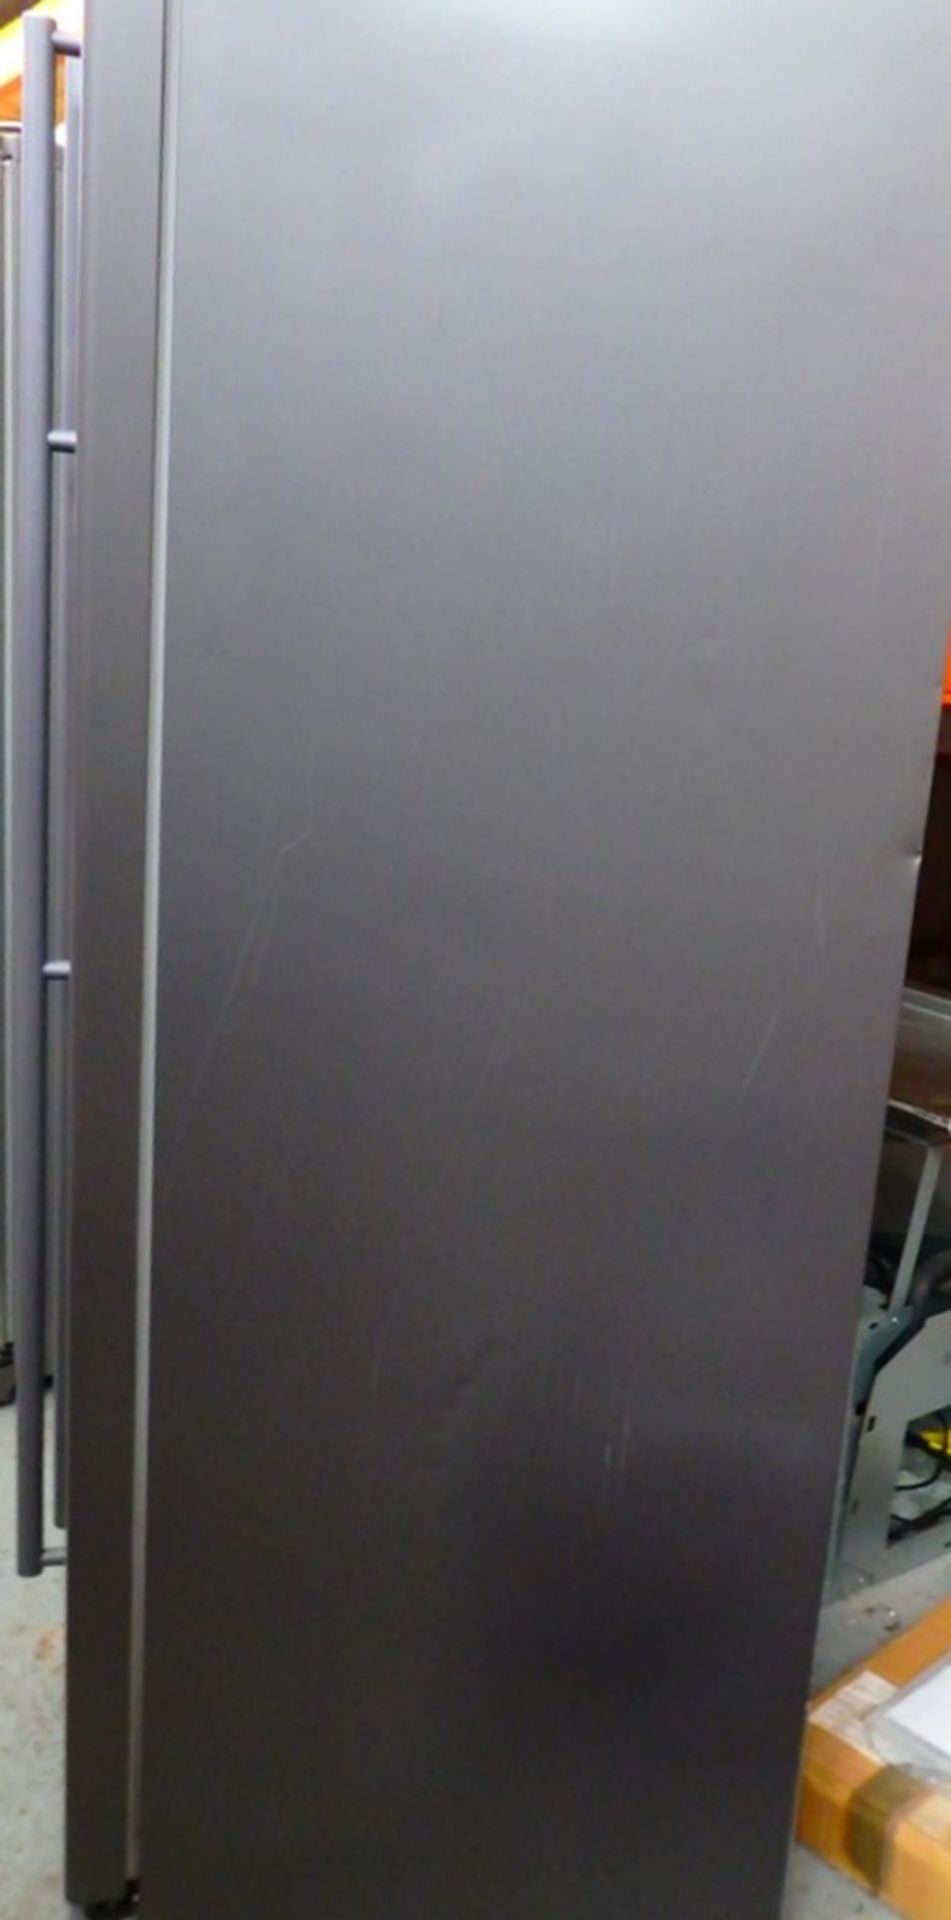 1 x Samsung American-Style (Side By Side) Fridge / Freezer RSA1WTMH - Dimensions: W91 x H178 x D73cm - Image 19 of 20